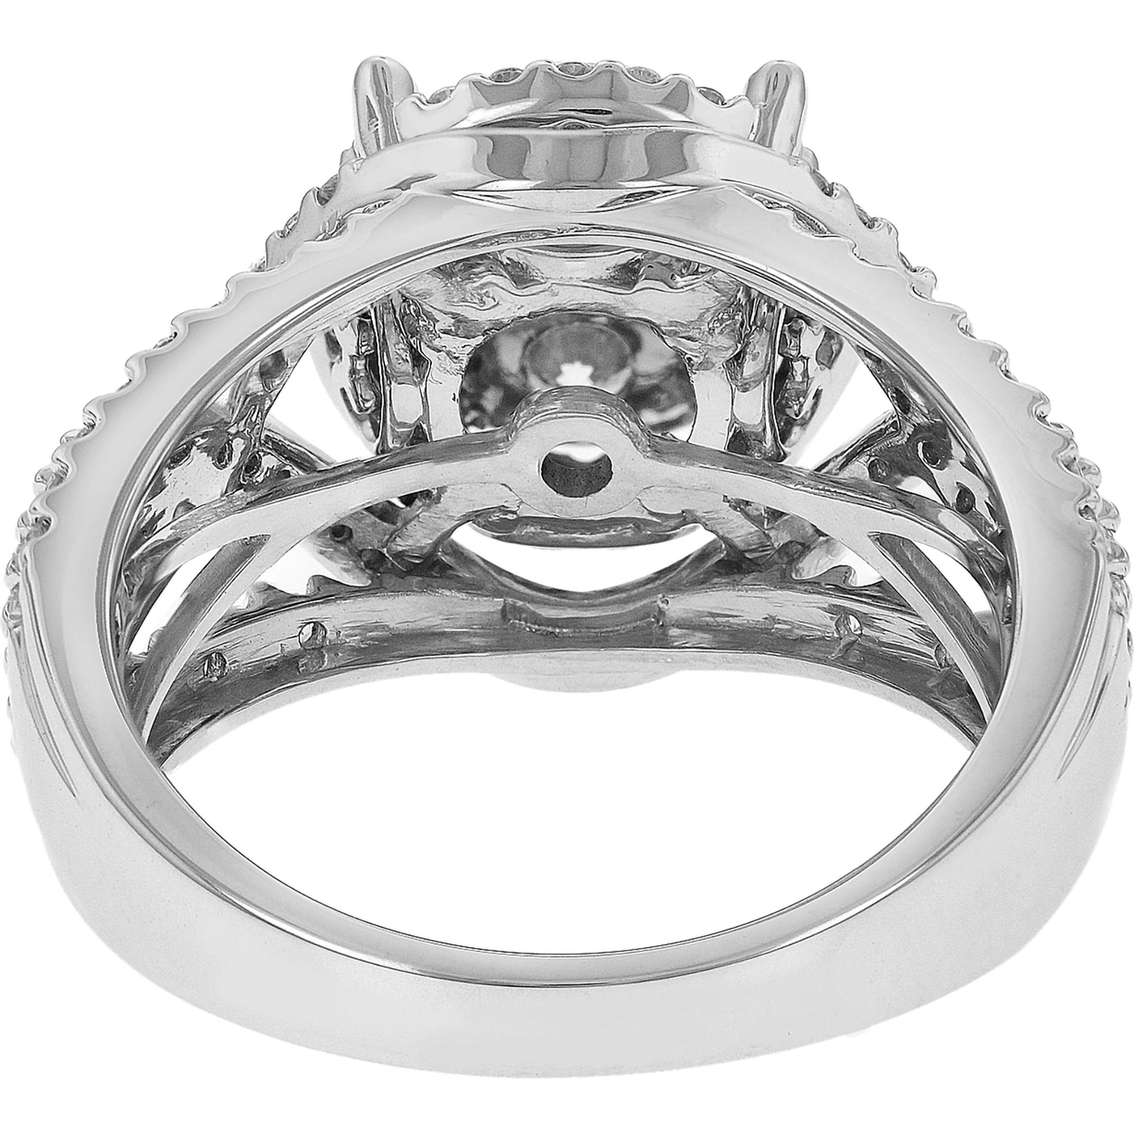 10K White Gold 1 CTW Diamond Ring, Size 7 - Image 3 of 3